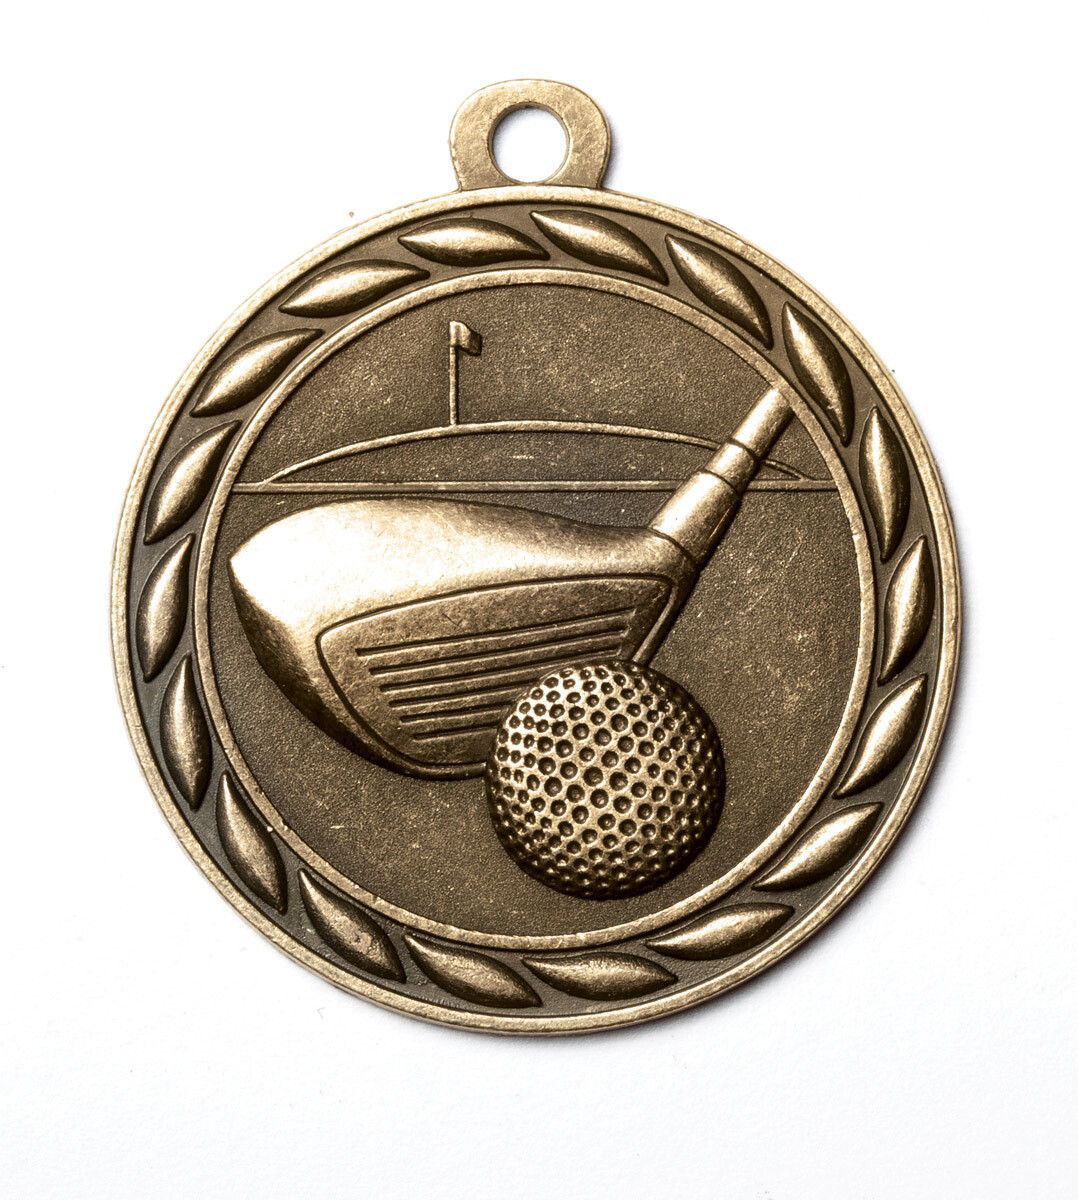 Scholastic Medal - Sport Series
GOLF MEDAL